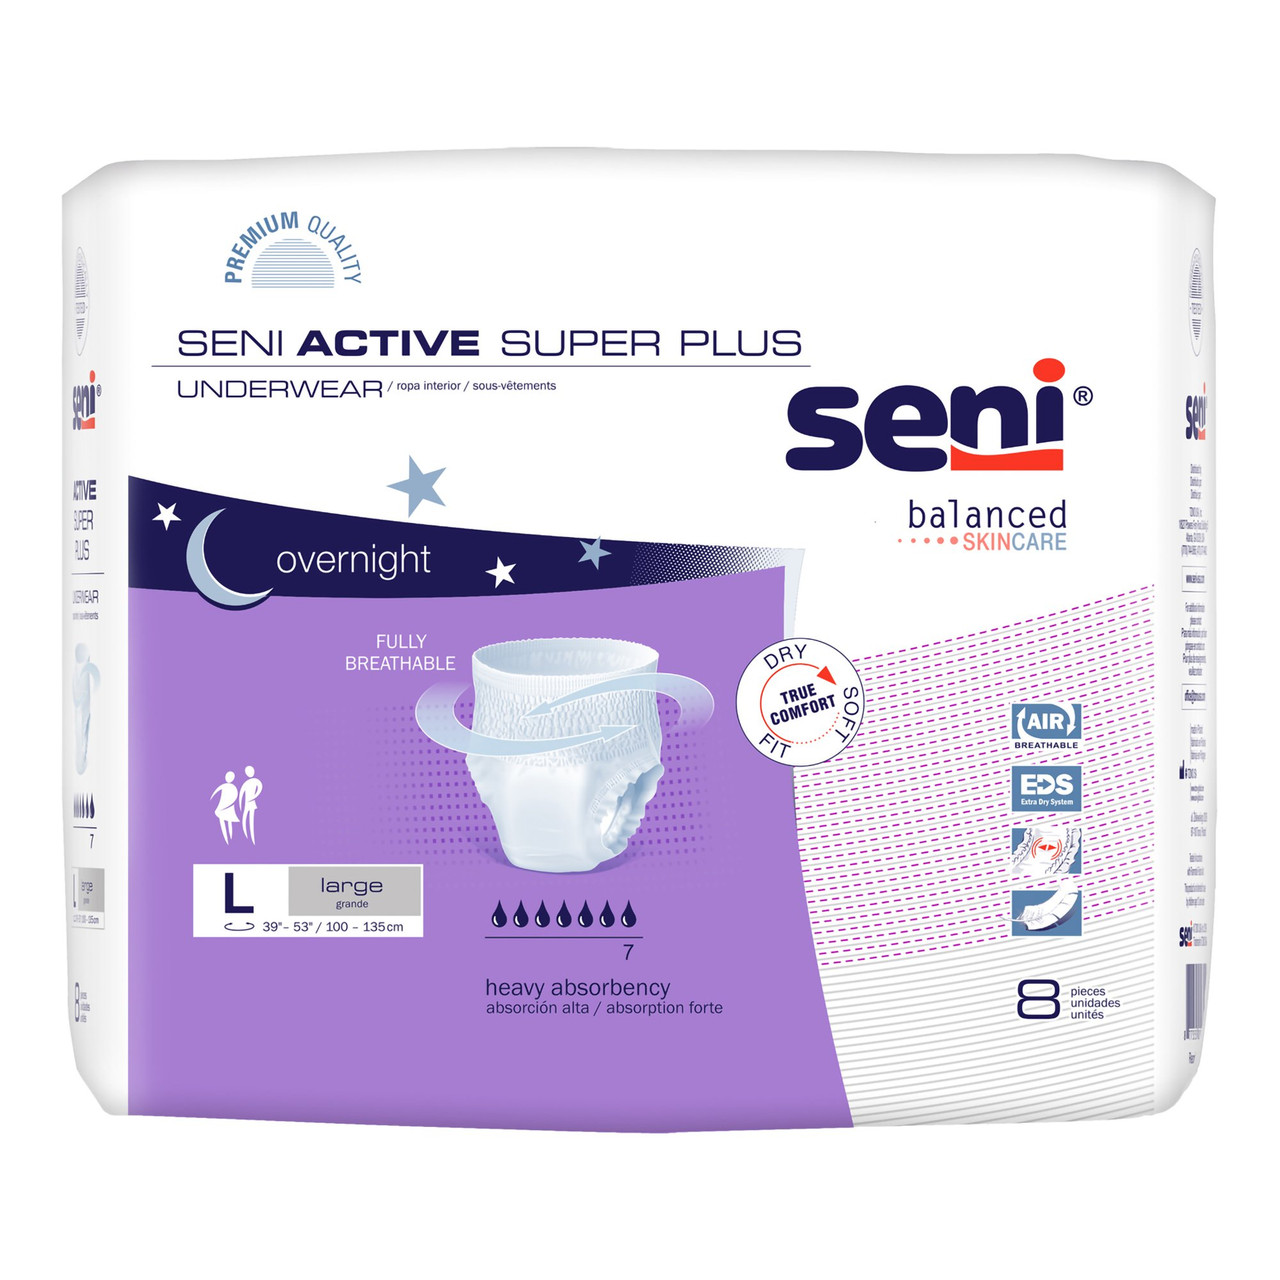 Tena Incontinence Underwear For Women - Super Plus Absorbency - S